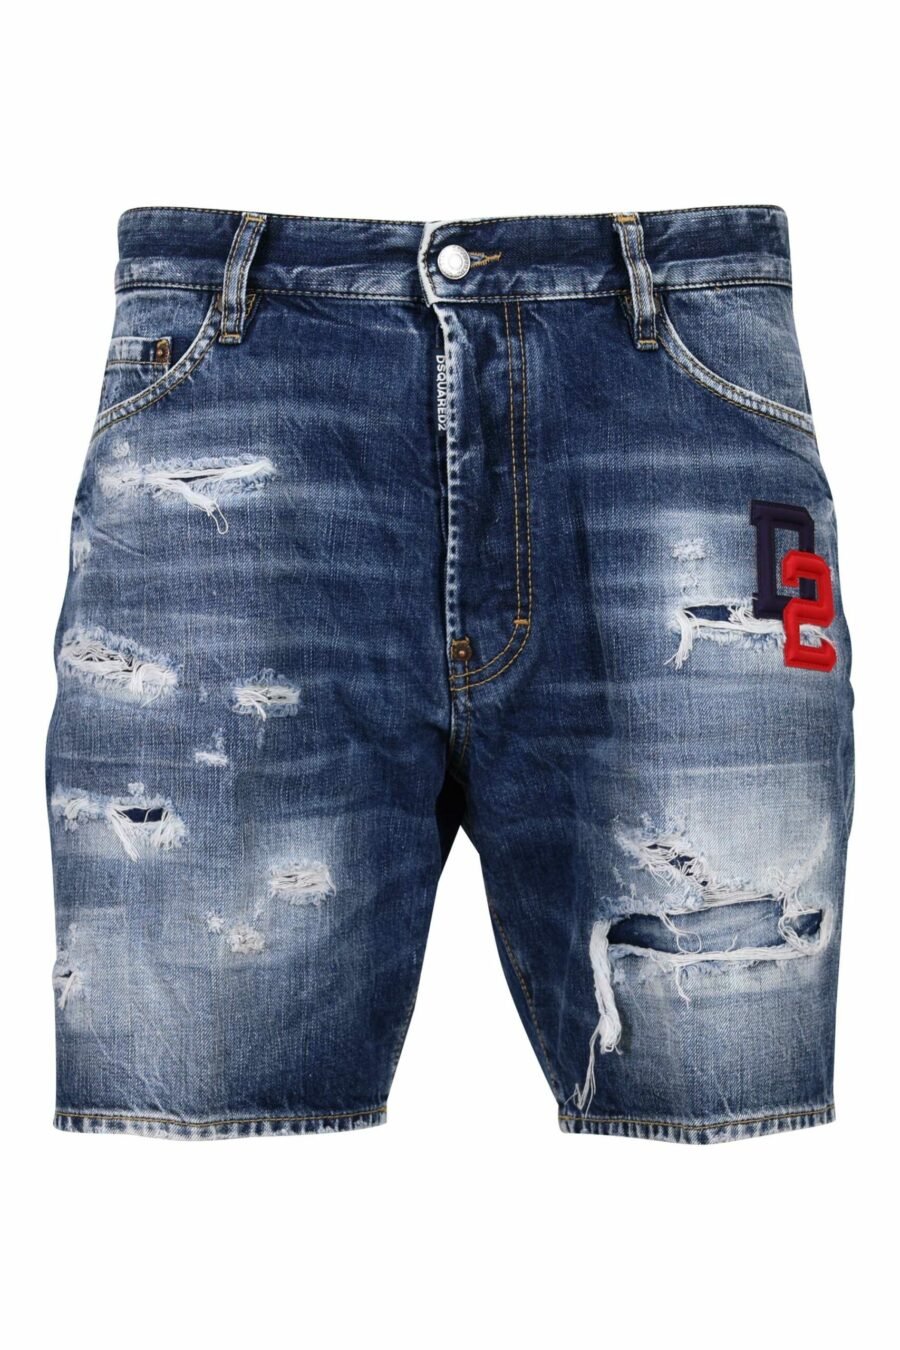 Blaue Denim-Shorts "marine short" mit rotem Logo - 8054148339920 skaliert